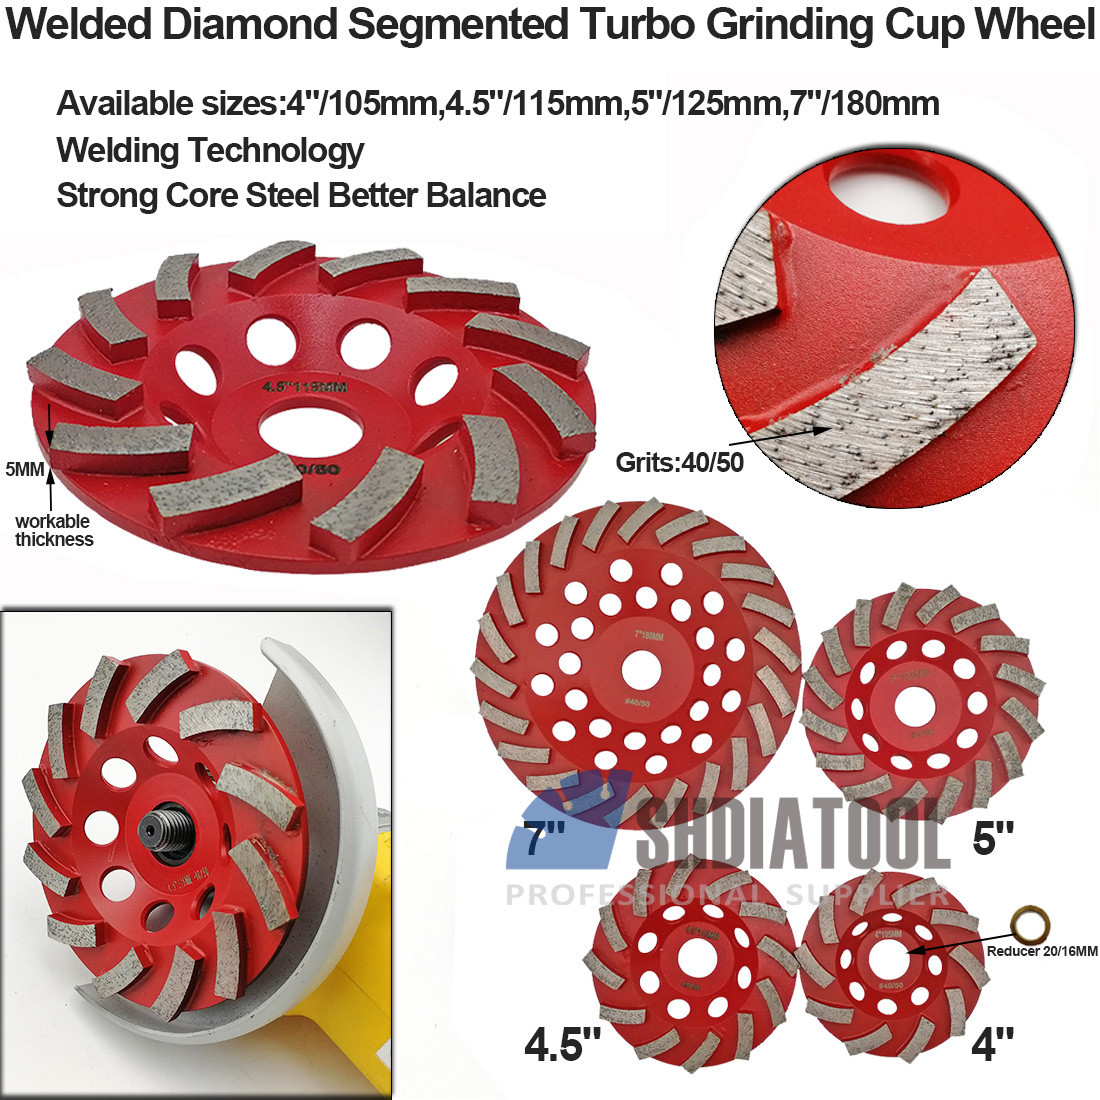 Welded Diamond Segmented Turbo Grinding Cup Wheel